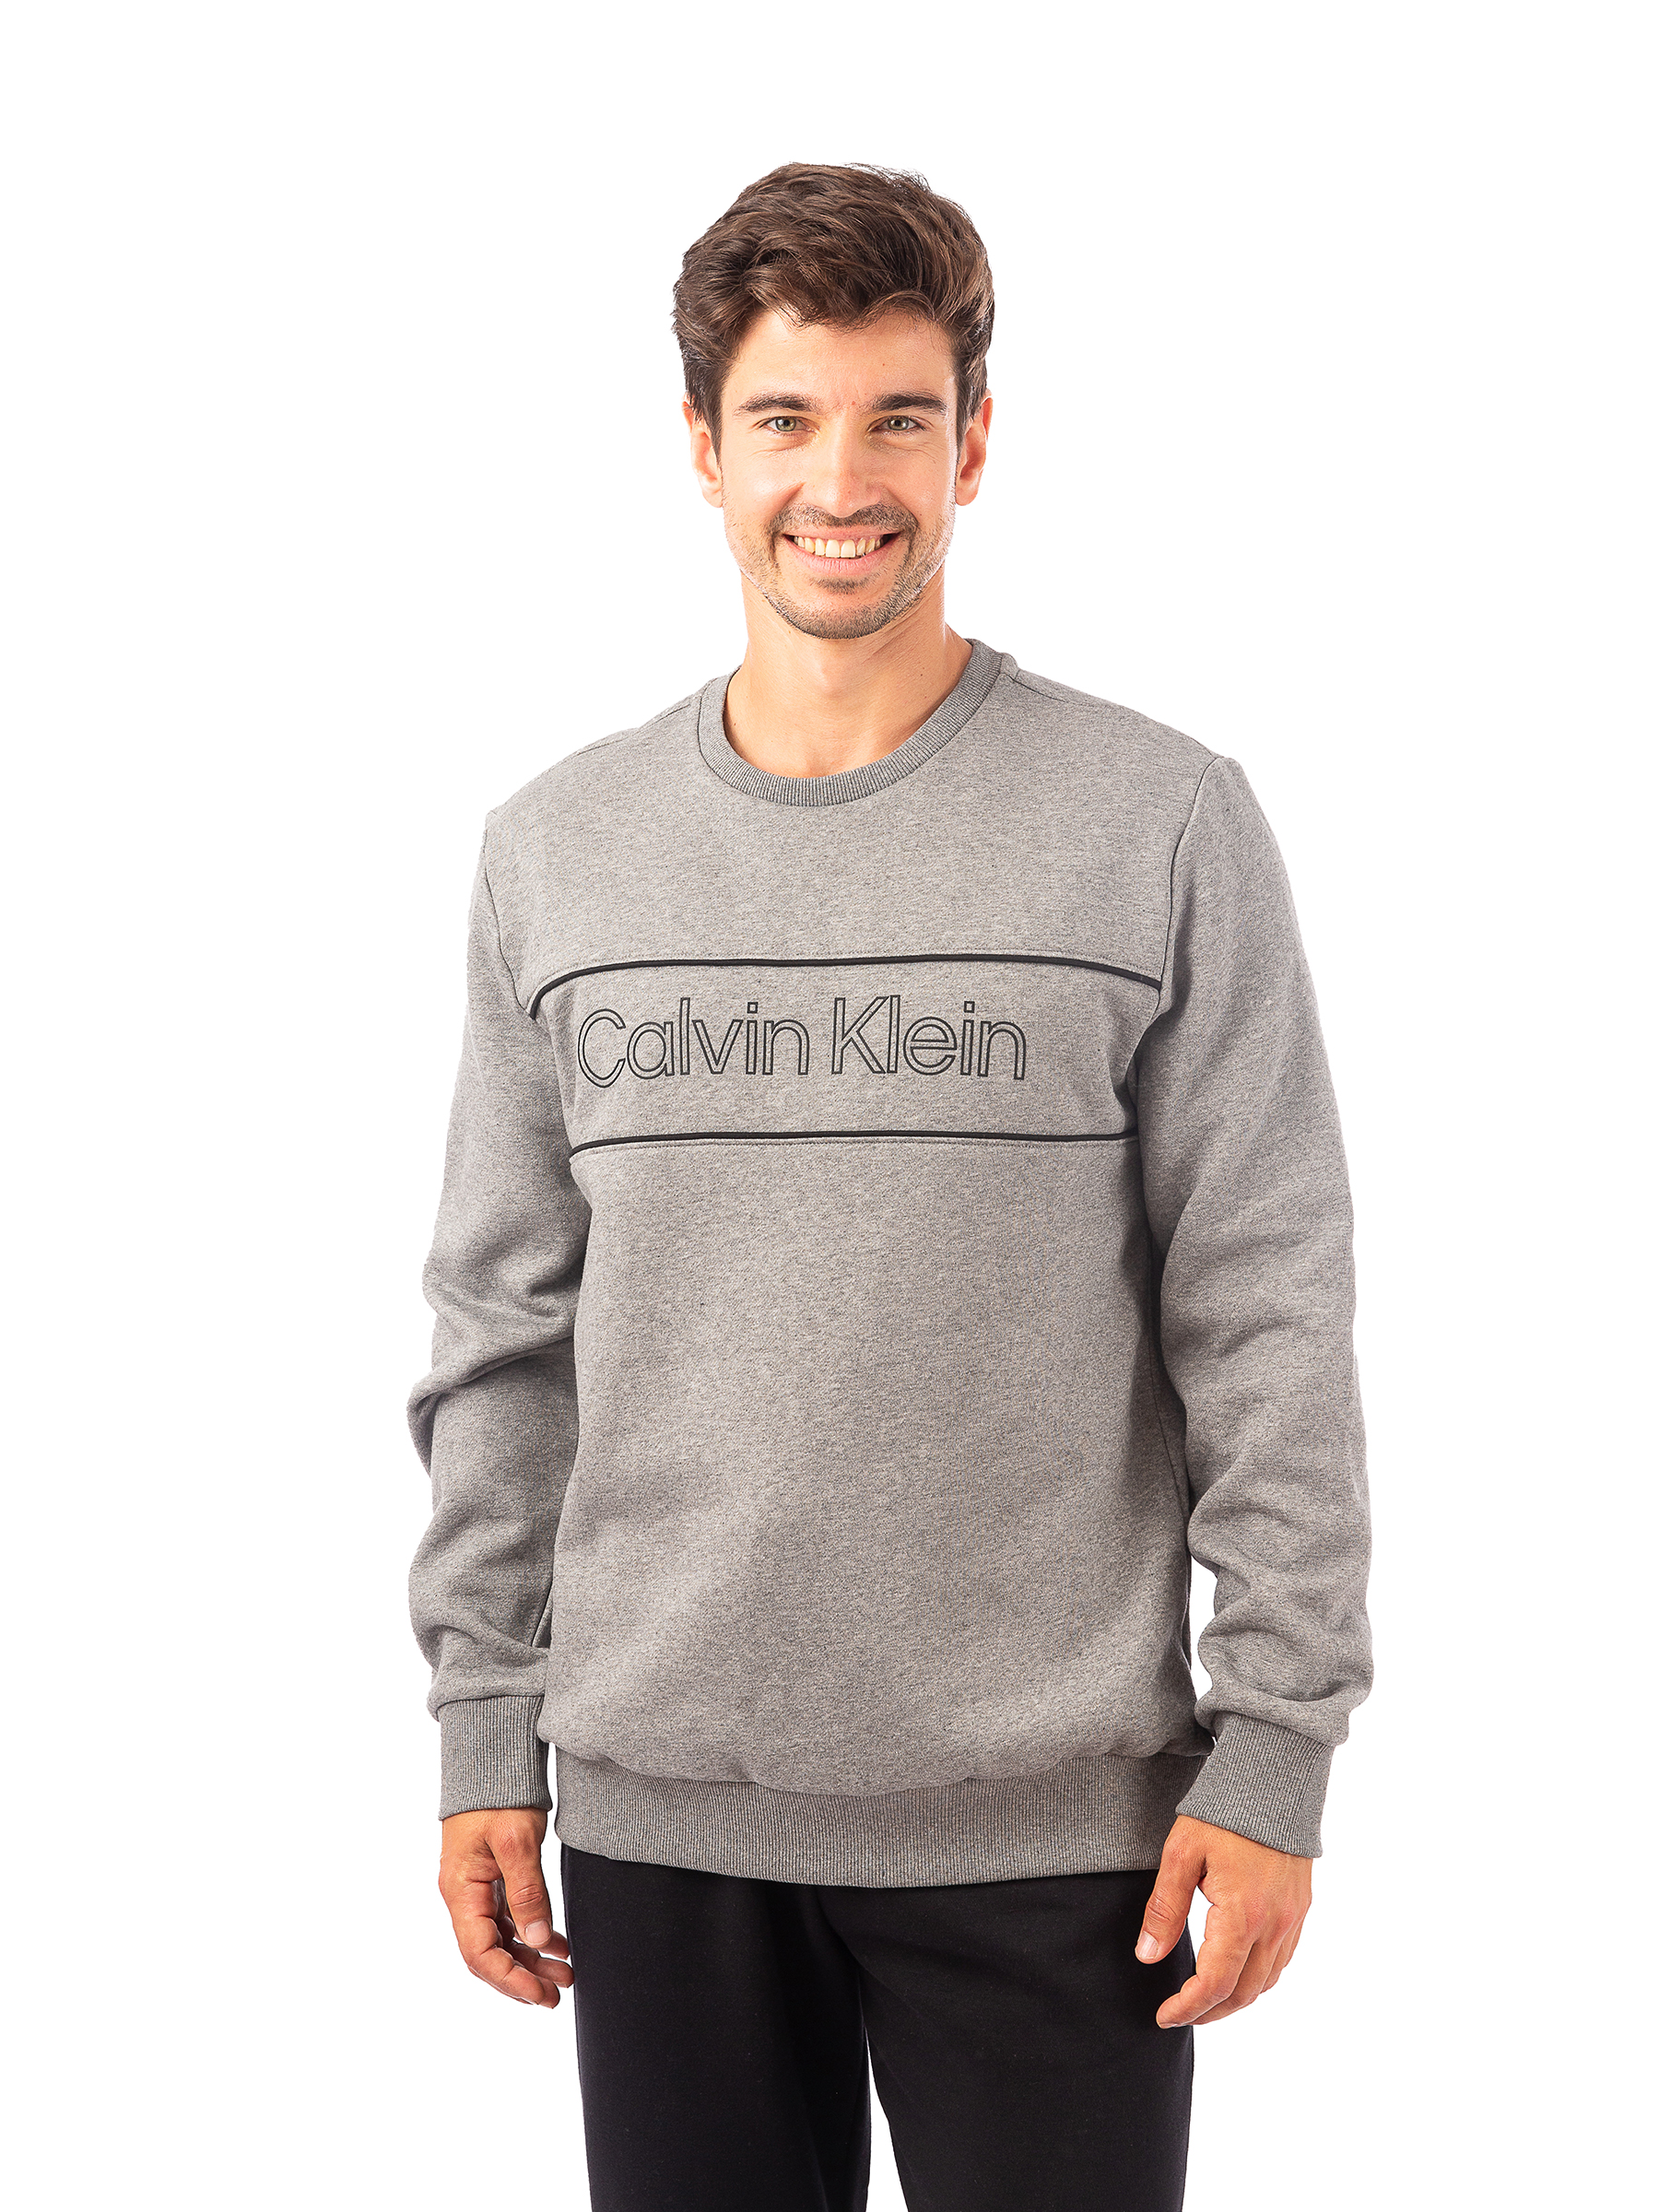 Свитшот мужской Calvin Klein 40J6242 серый XL